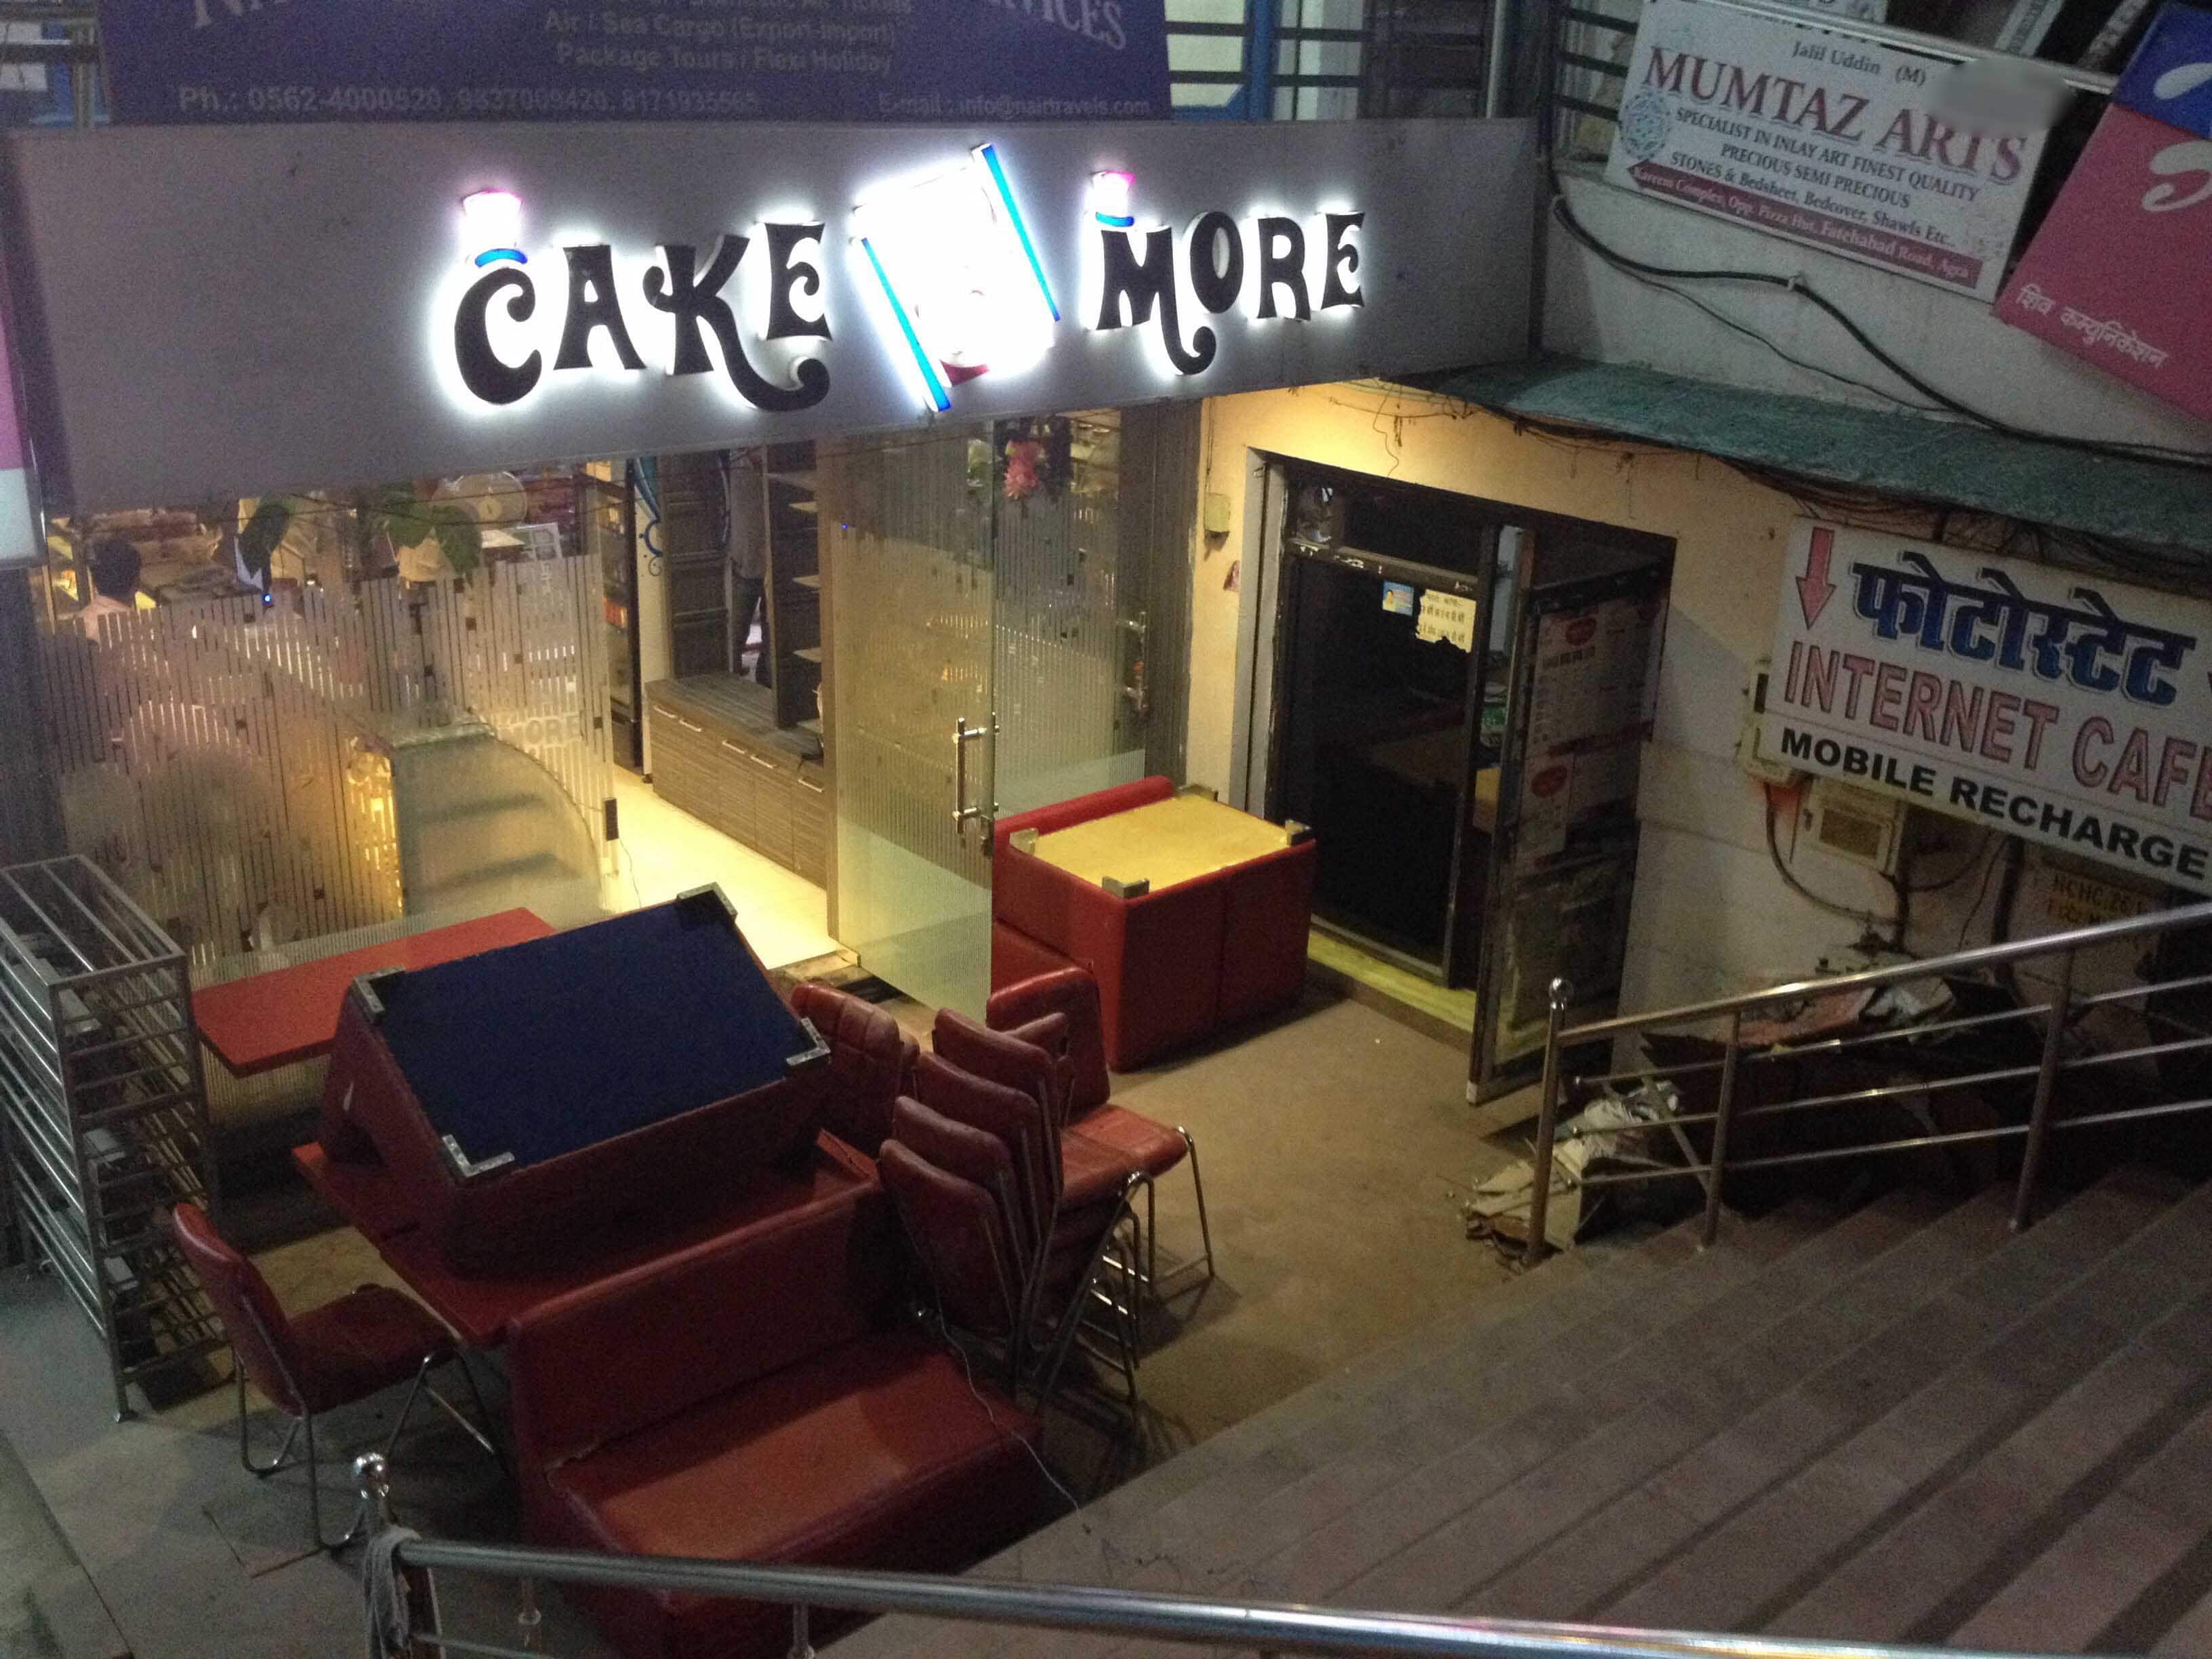 Fnp Cakes 'N' More in New Alipore,Kolkata - Best Cake Shops in Kolkata -  Justdial